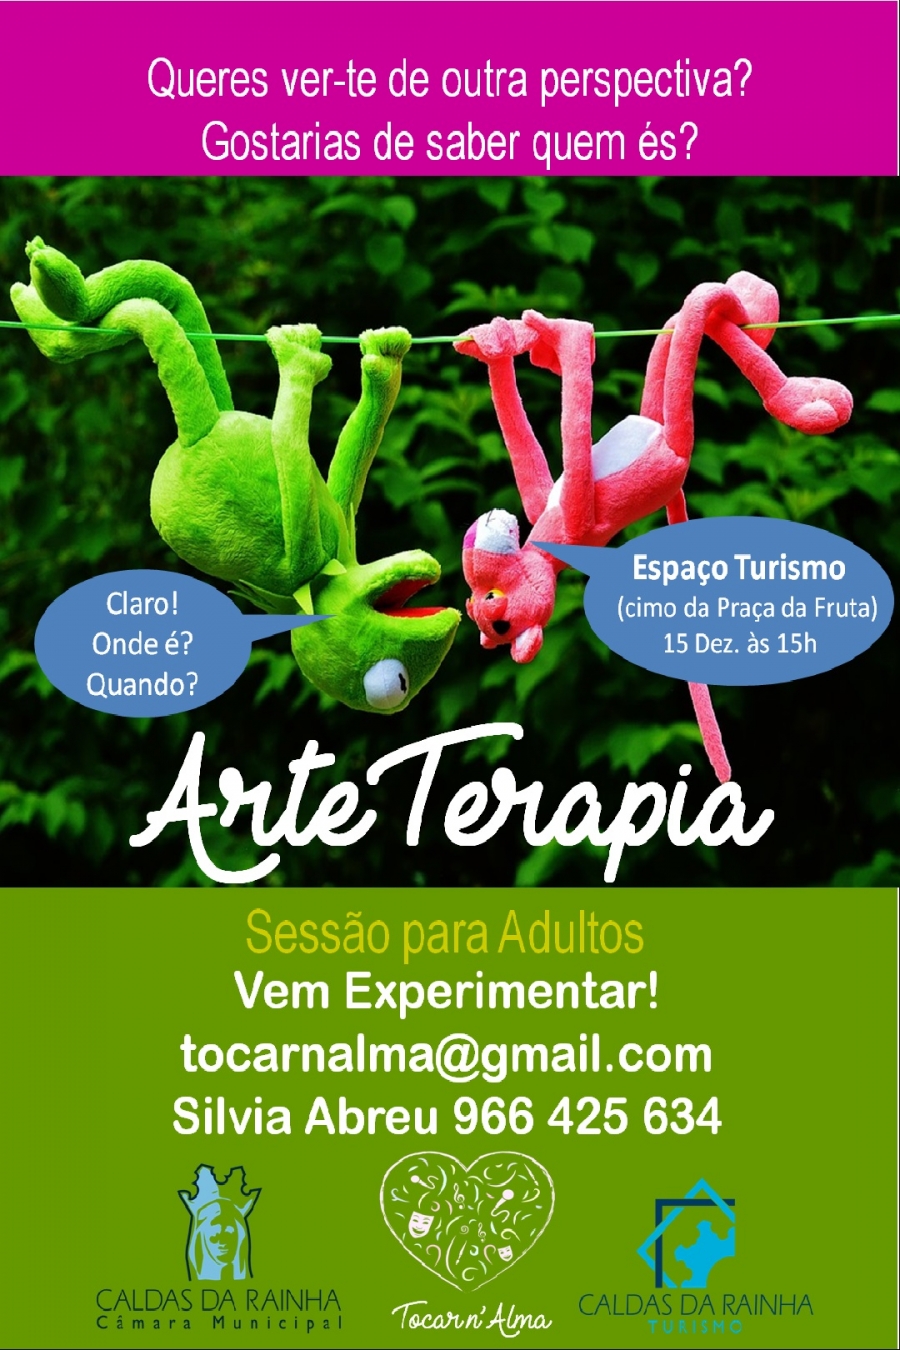 ESPAÇO TURISMO CONVIDA... 'Workshop de Arte Terapia'